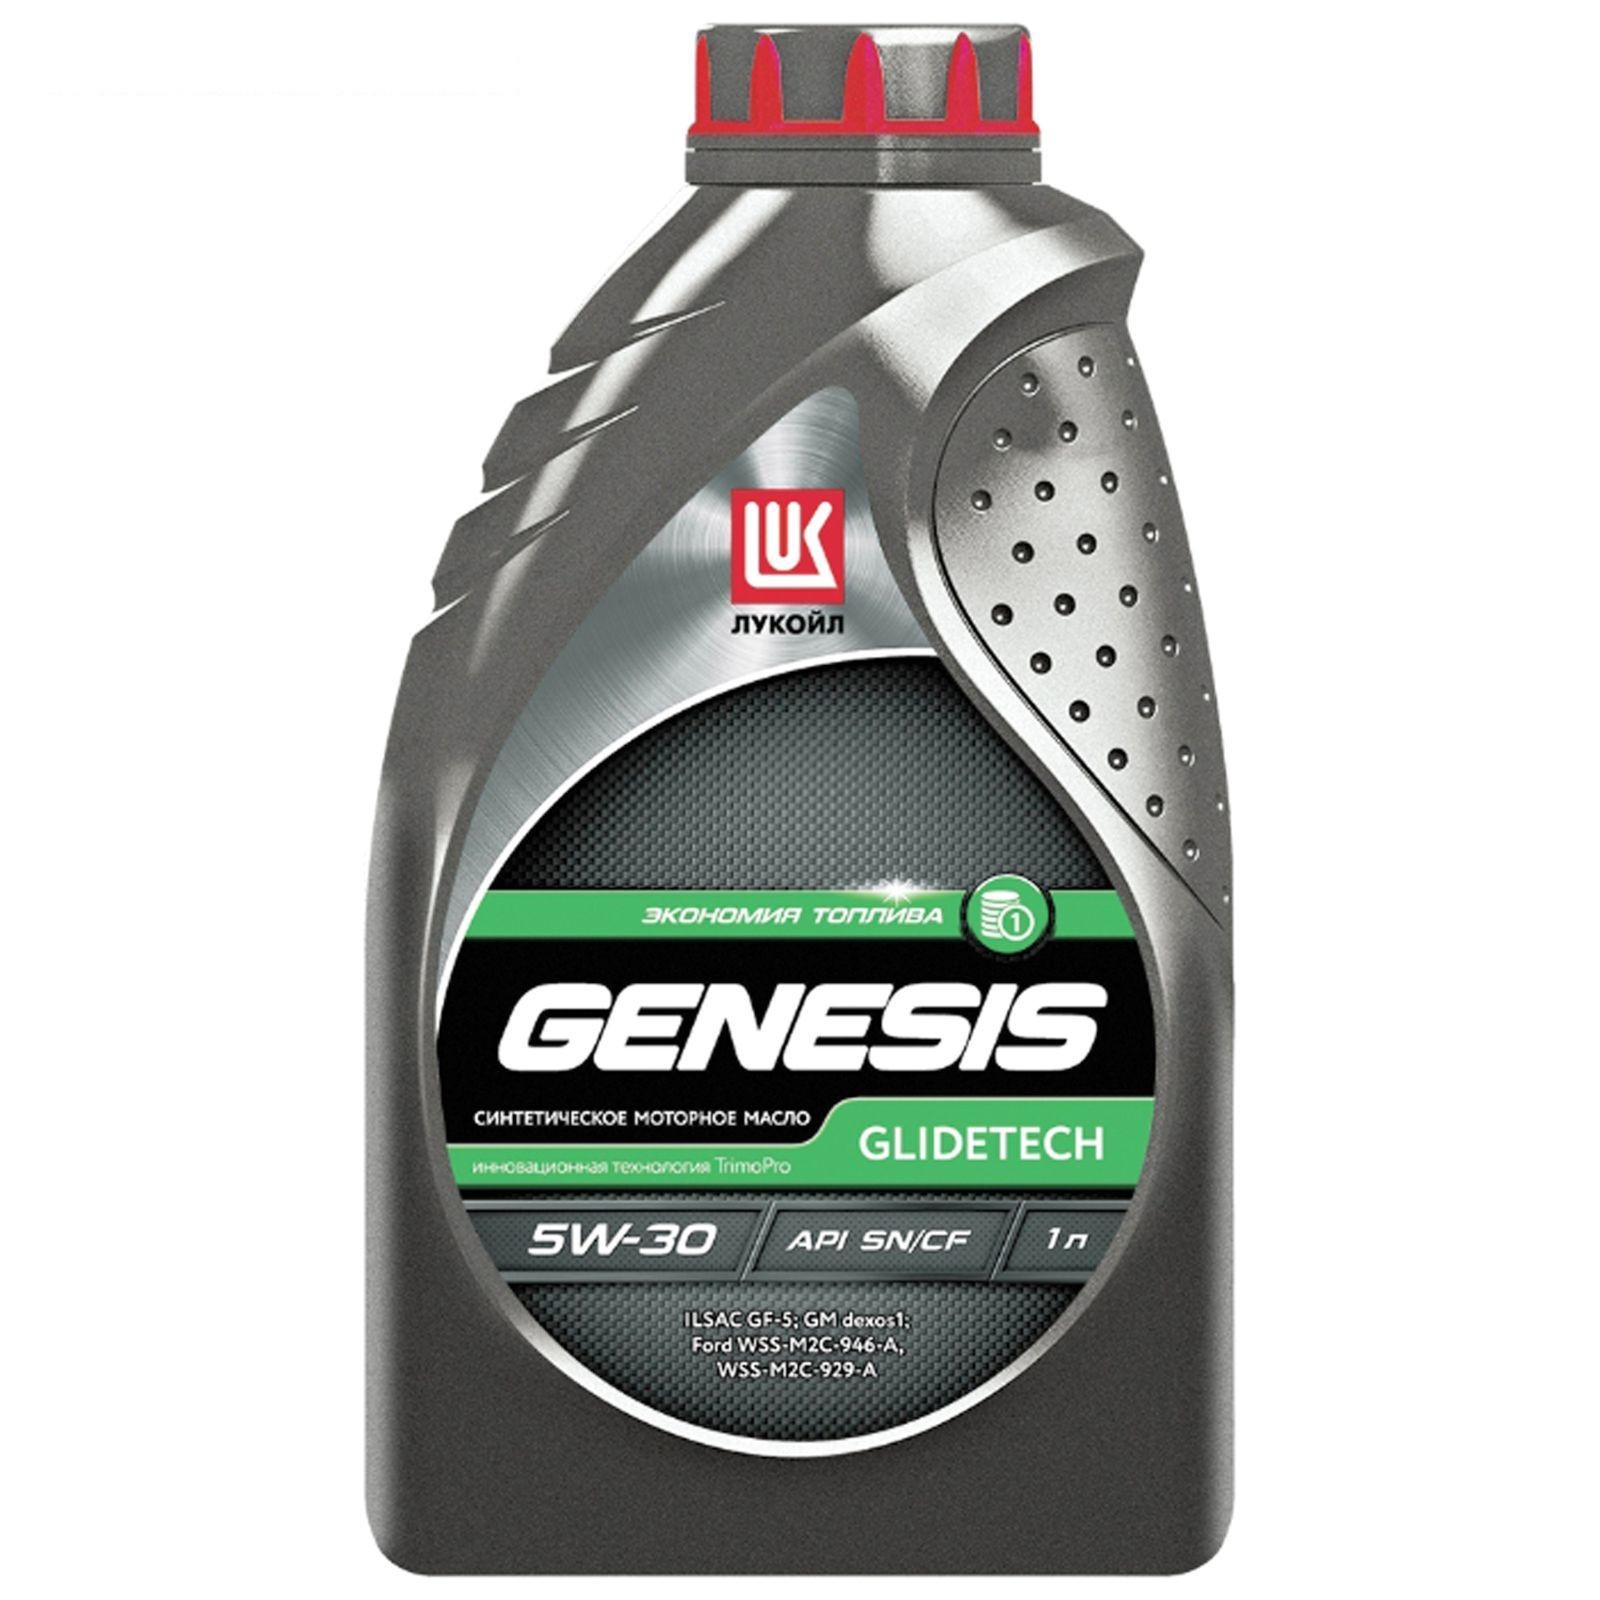 Лукойл Genesis Glidetech 5W-30 - Синтетическое моторное масло